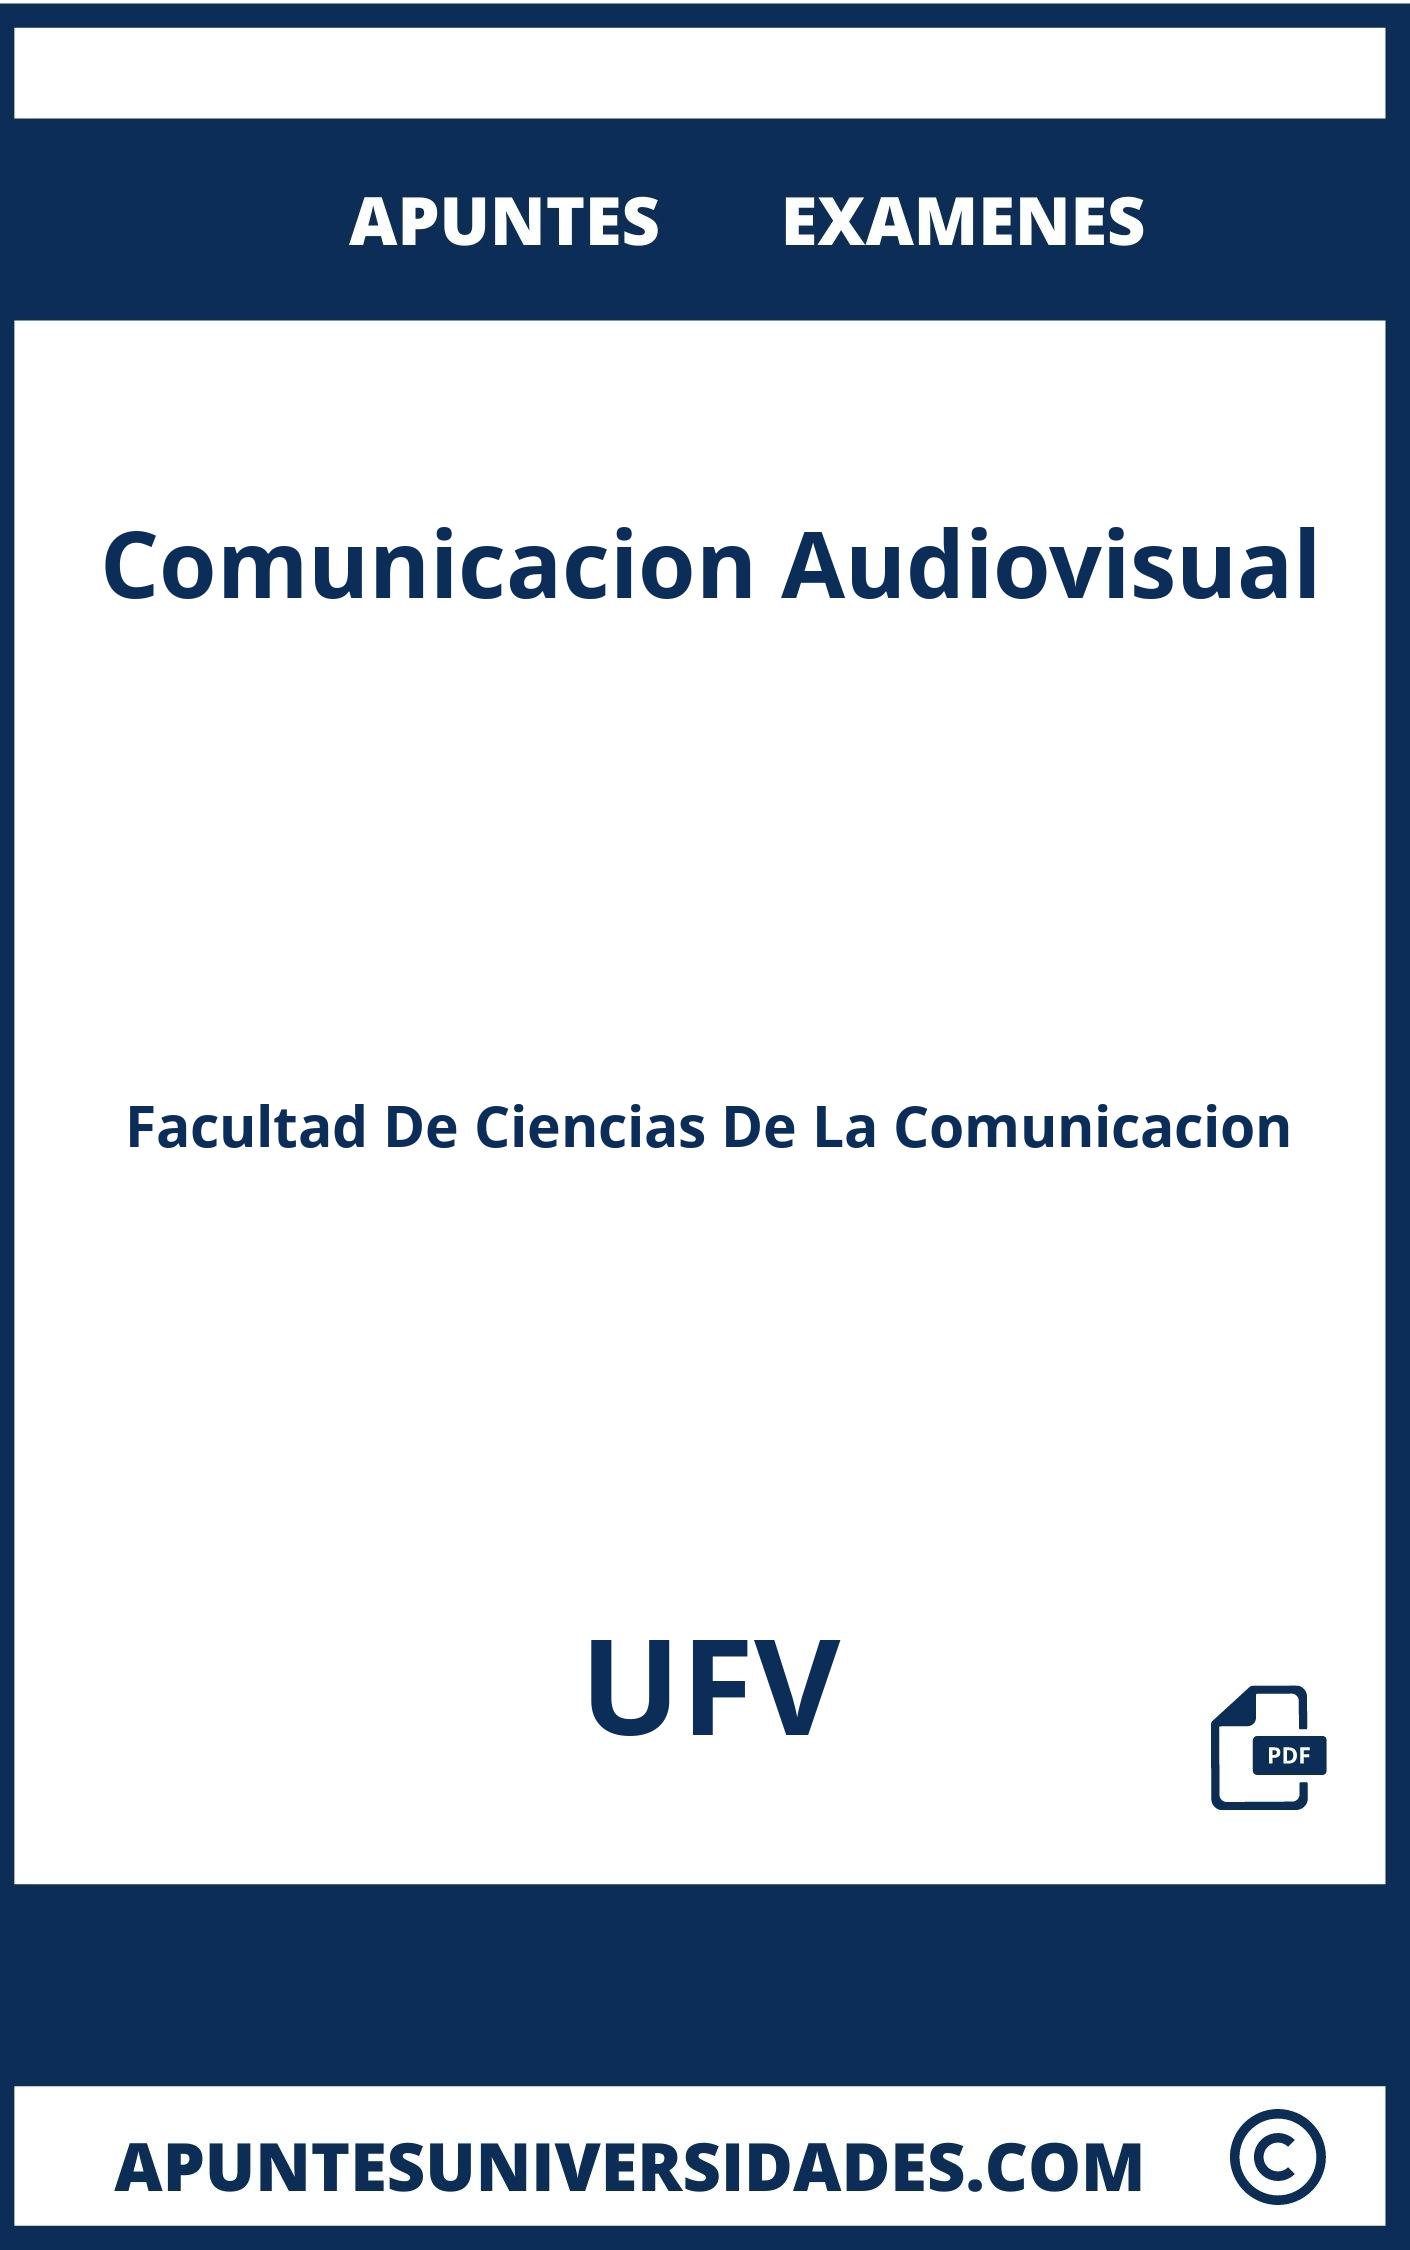 Apuntes Comunicacion Audiovisual UFV y Examenes